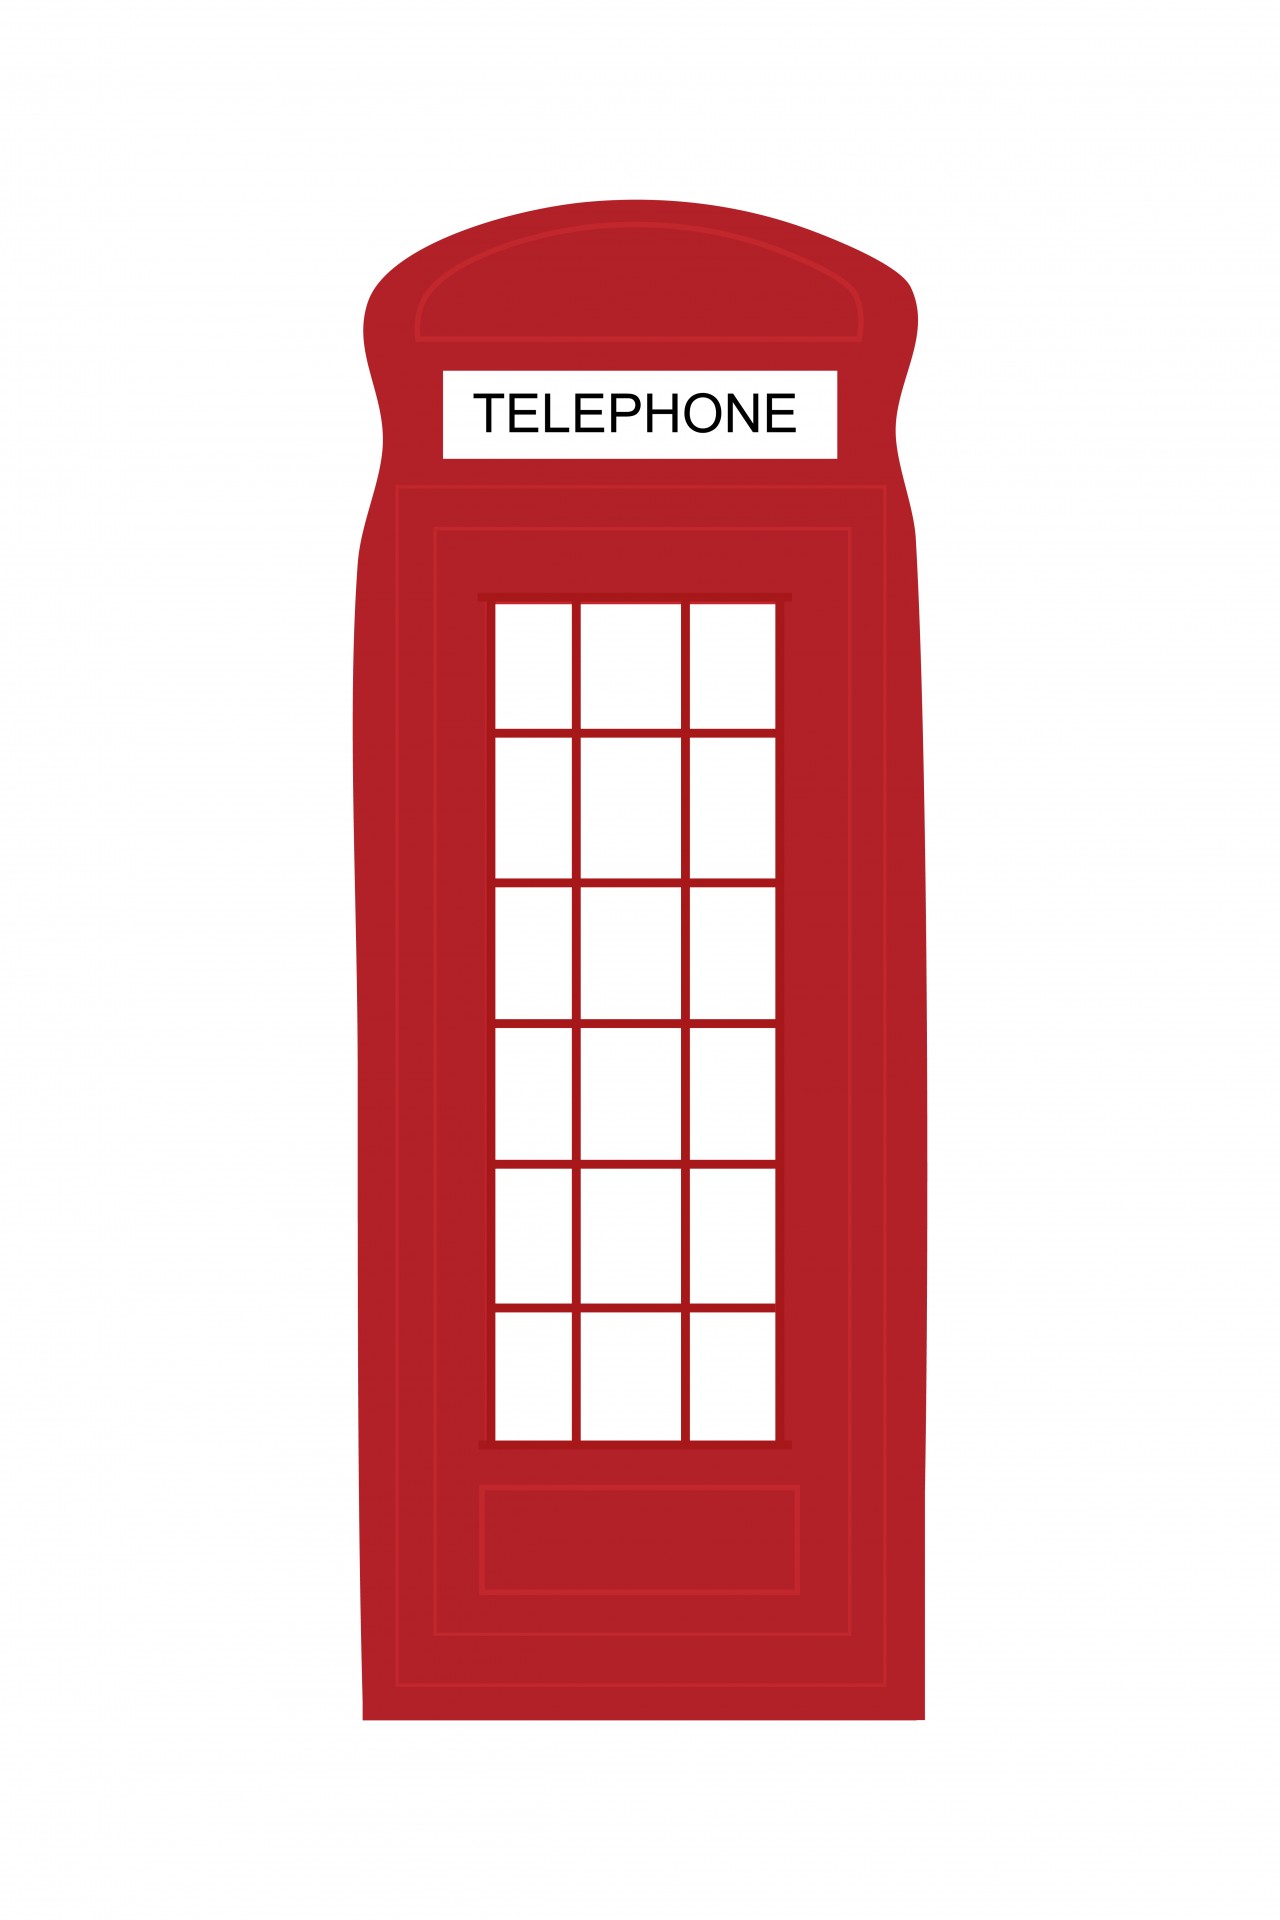 London Telephone Box Clipart